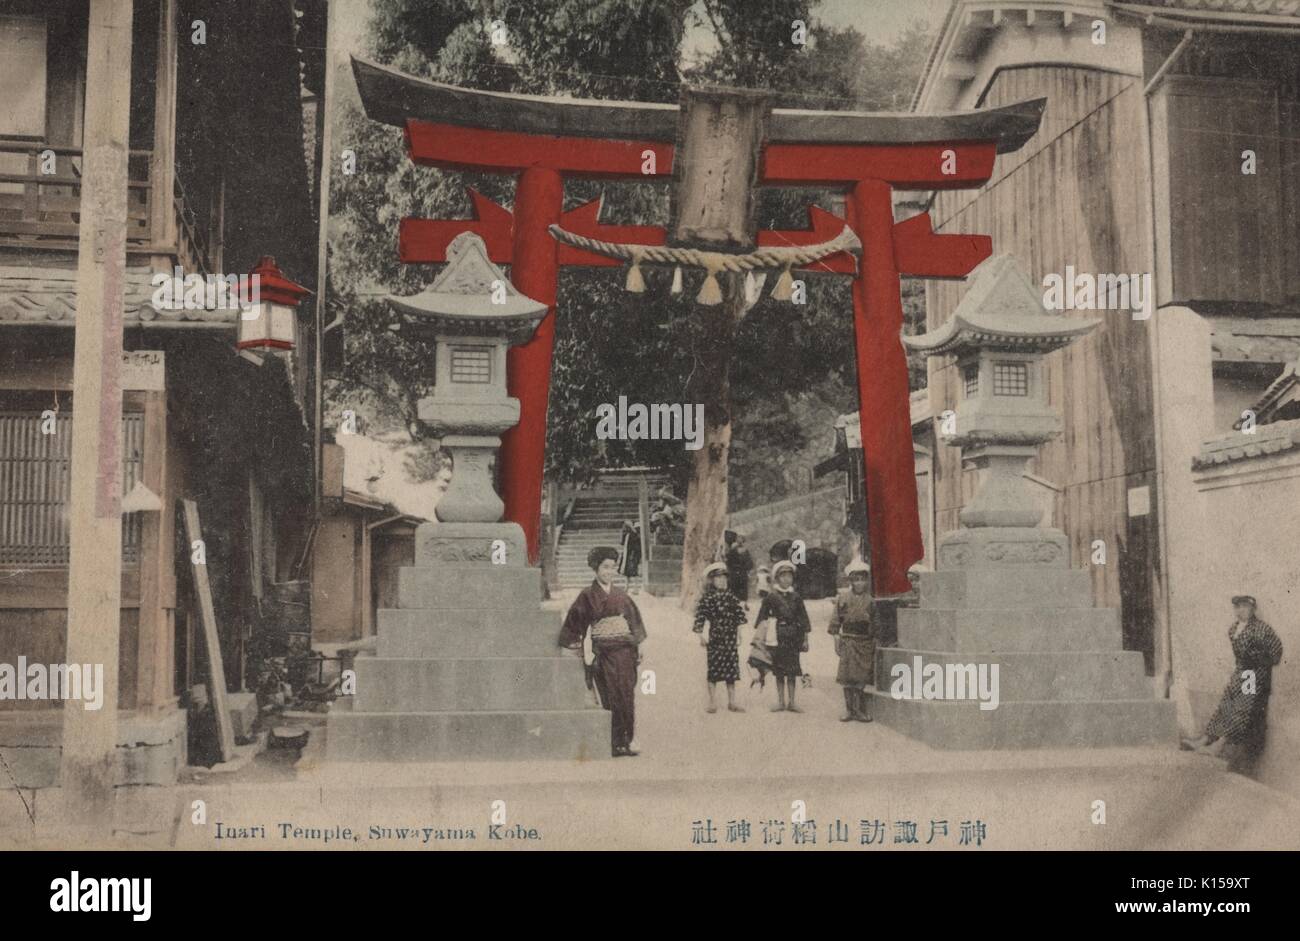 Hand colored postcard of entrance at Inari Temple, Suwayama, Kobe, Japan, 1912. From the New York Public Library. Stock Photo